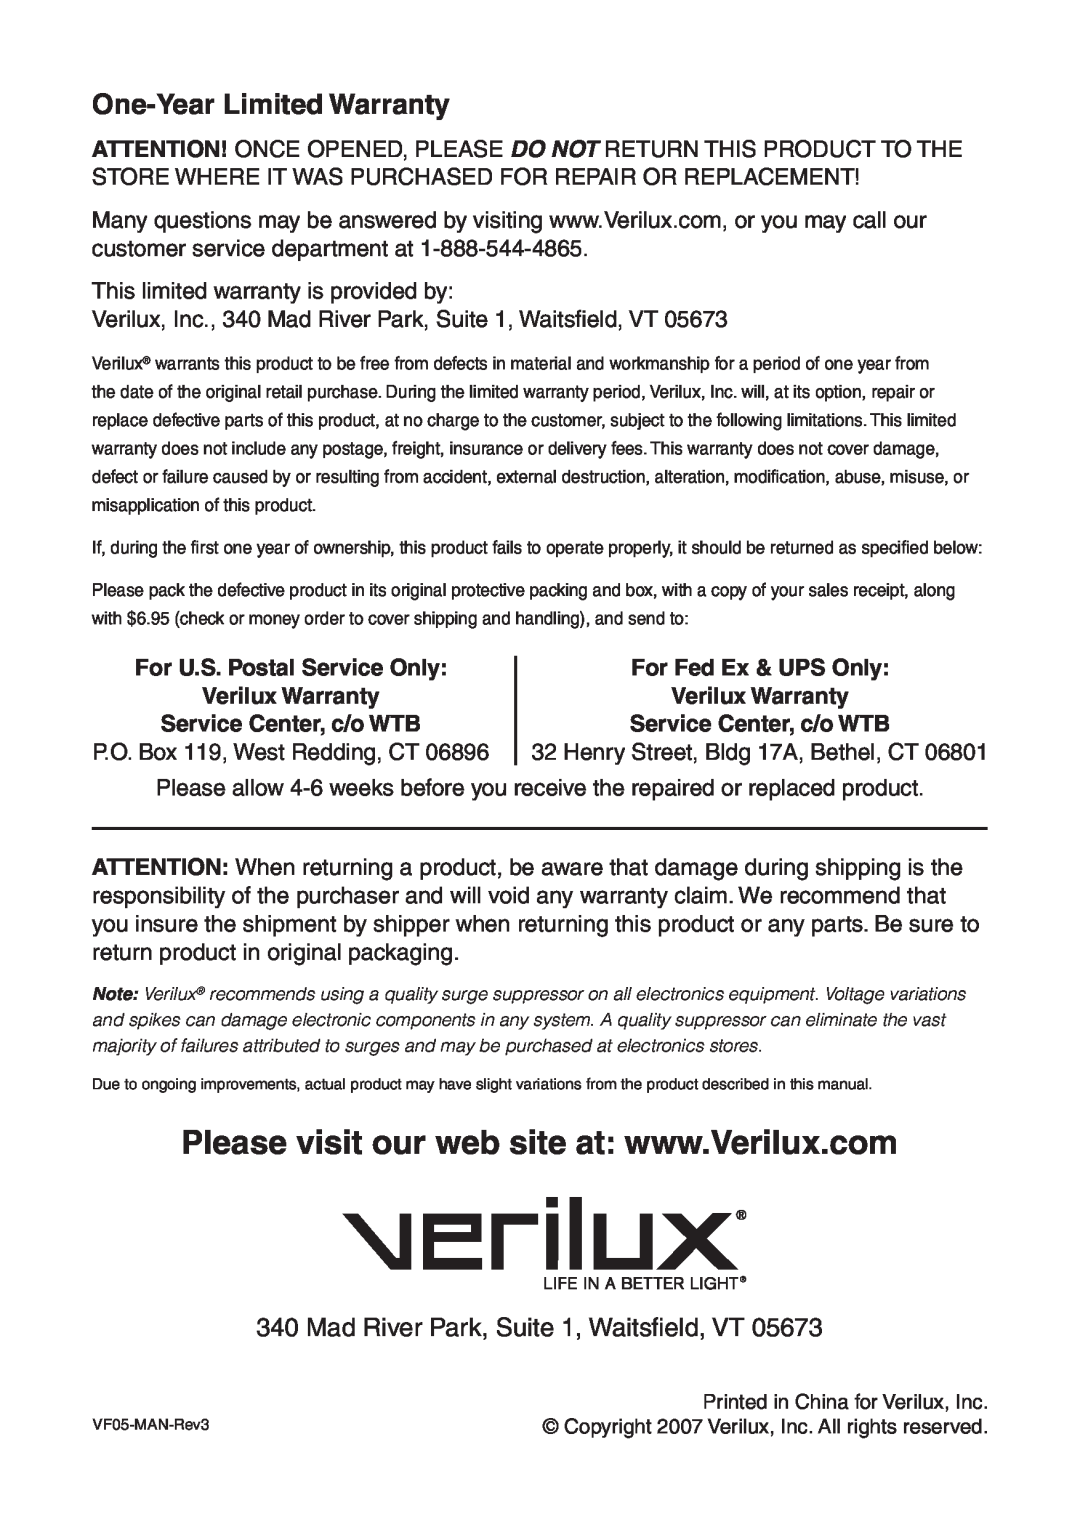 Verilux VF05-MAN-REV3 warranty One-YearLimited Warranty, Mad River Park, Suite 1, Waitsﬁeld, VT, Service Center, c/o WTB 